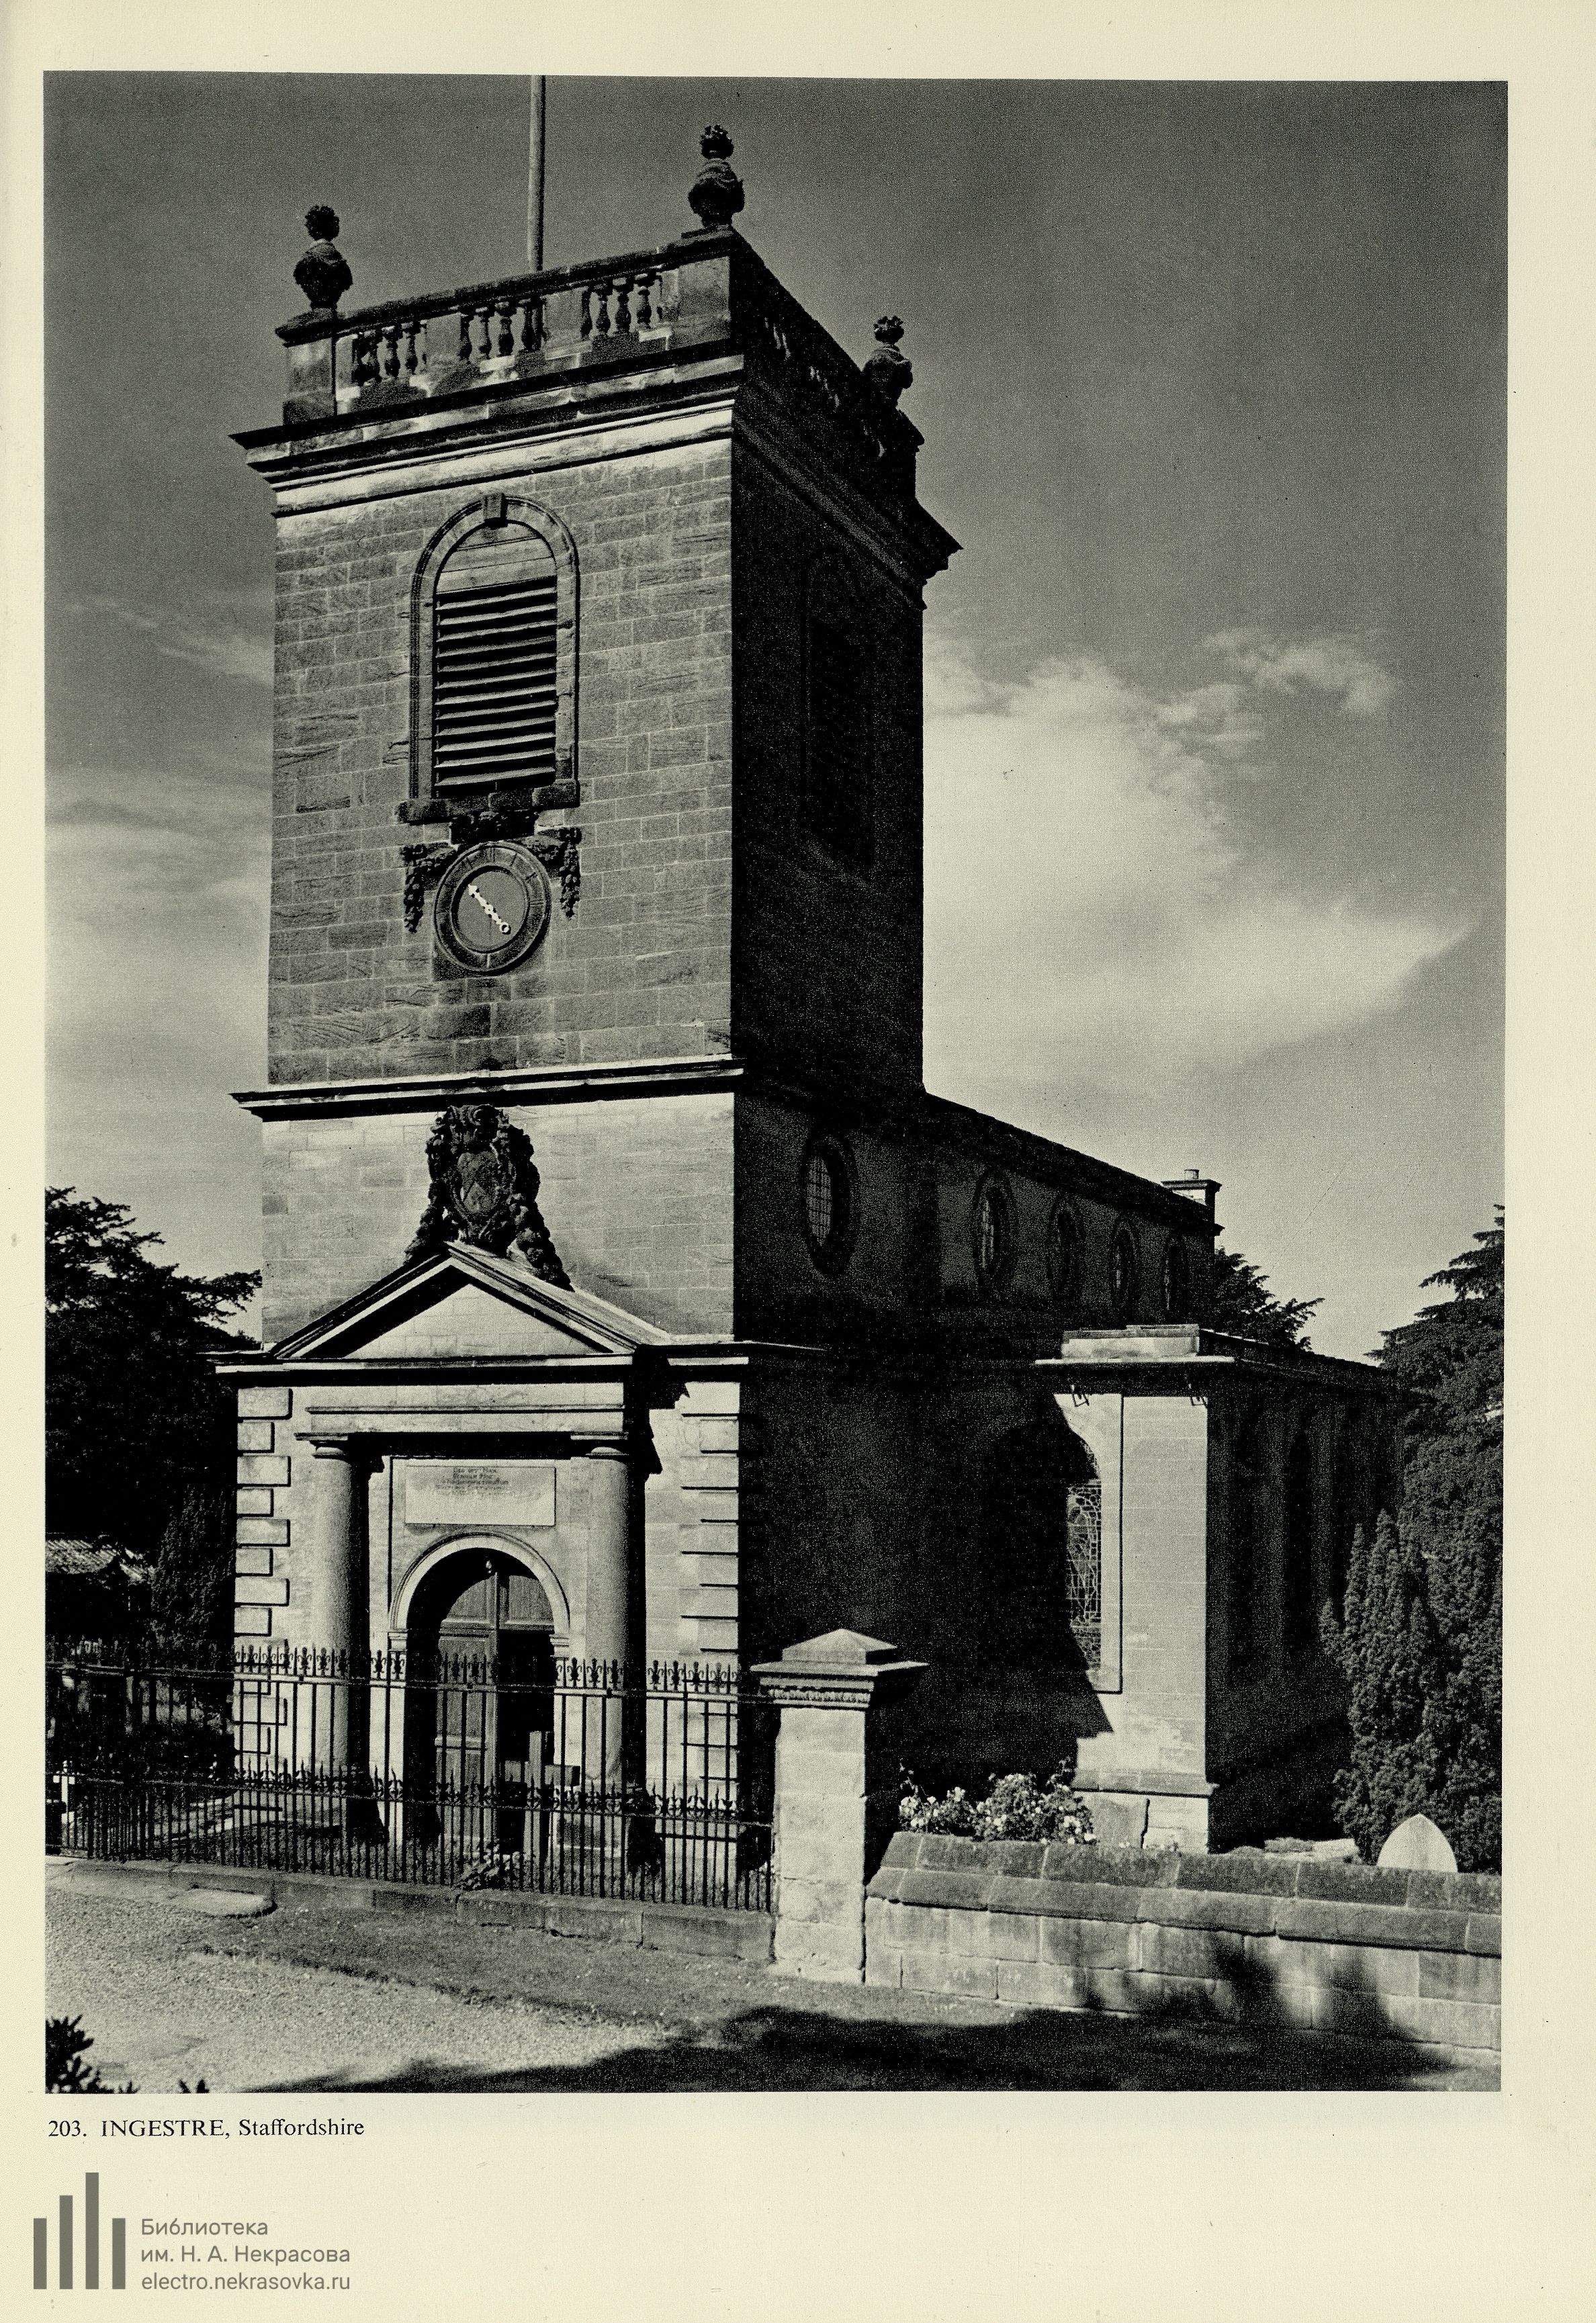 English Parish Churches / Text by Graham Hutton; 226 Photographs by Edwin Smith. — Boston : Houghton Mifflin Company ; Cambridge : The Riverside Press, 1953